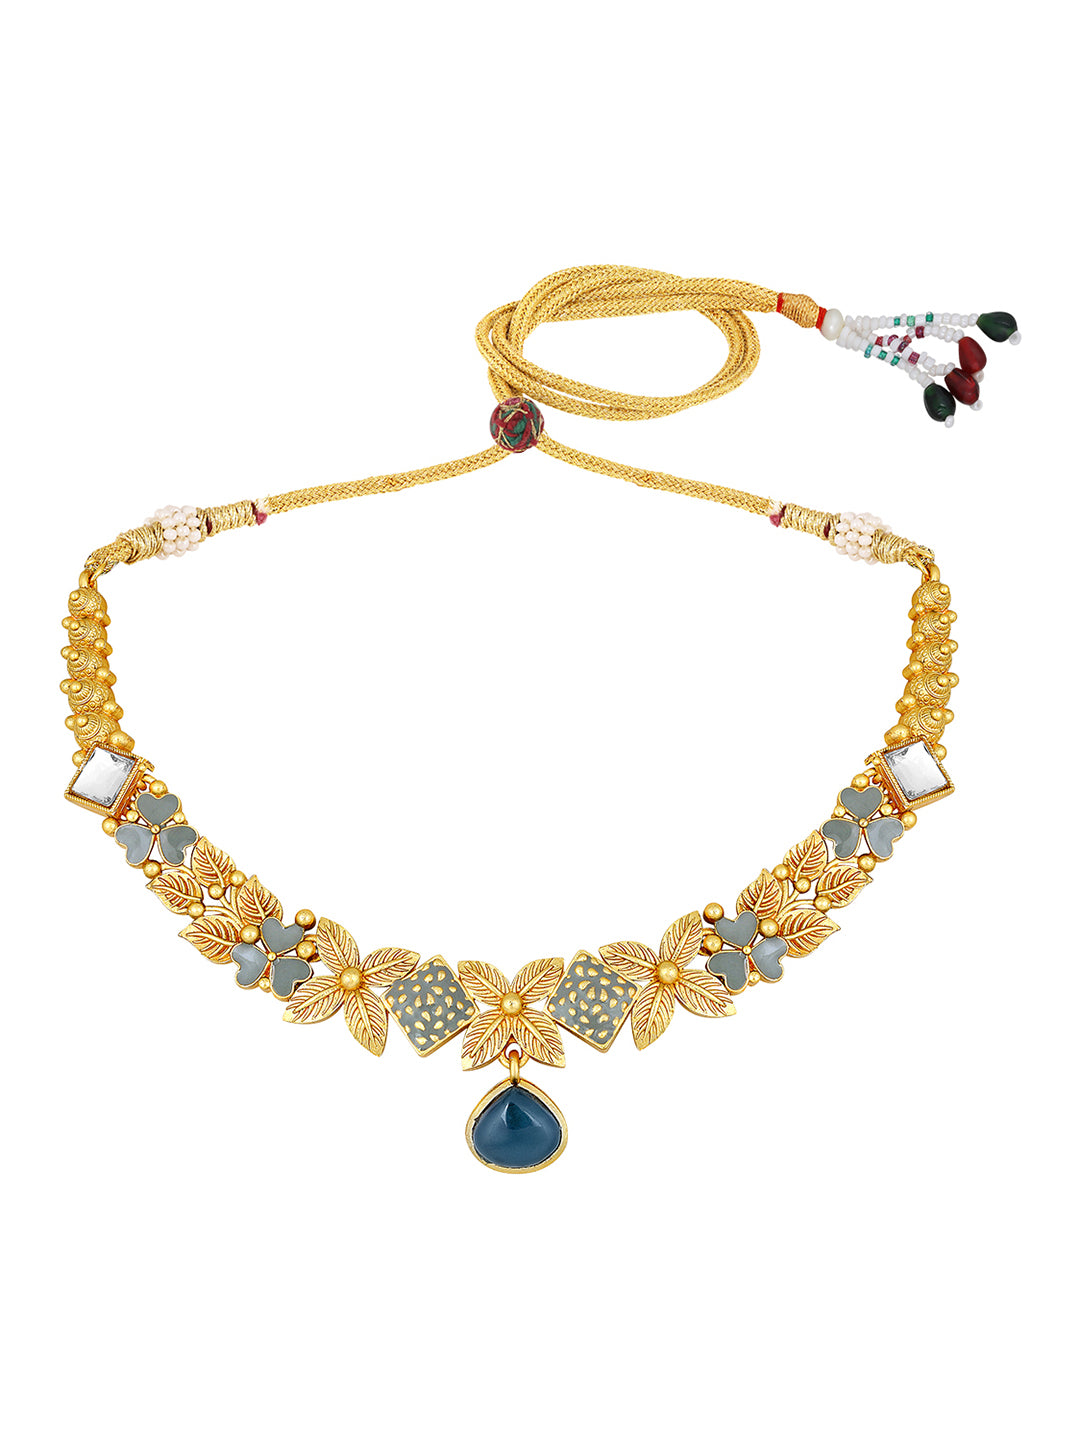 Gold Toned Kundan Jewellery Set